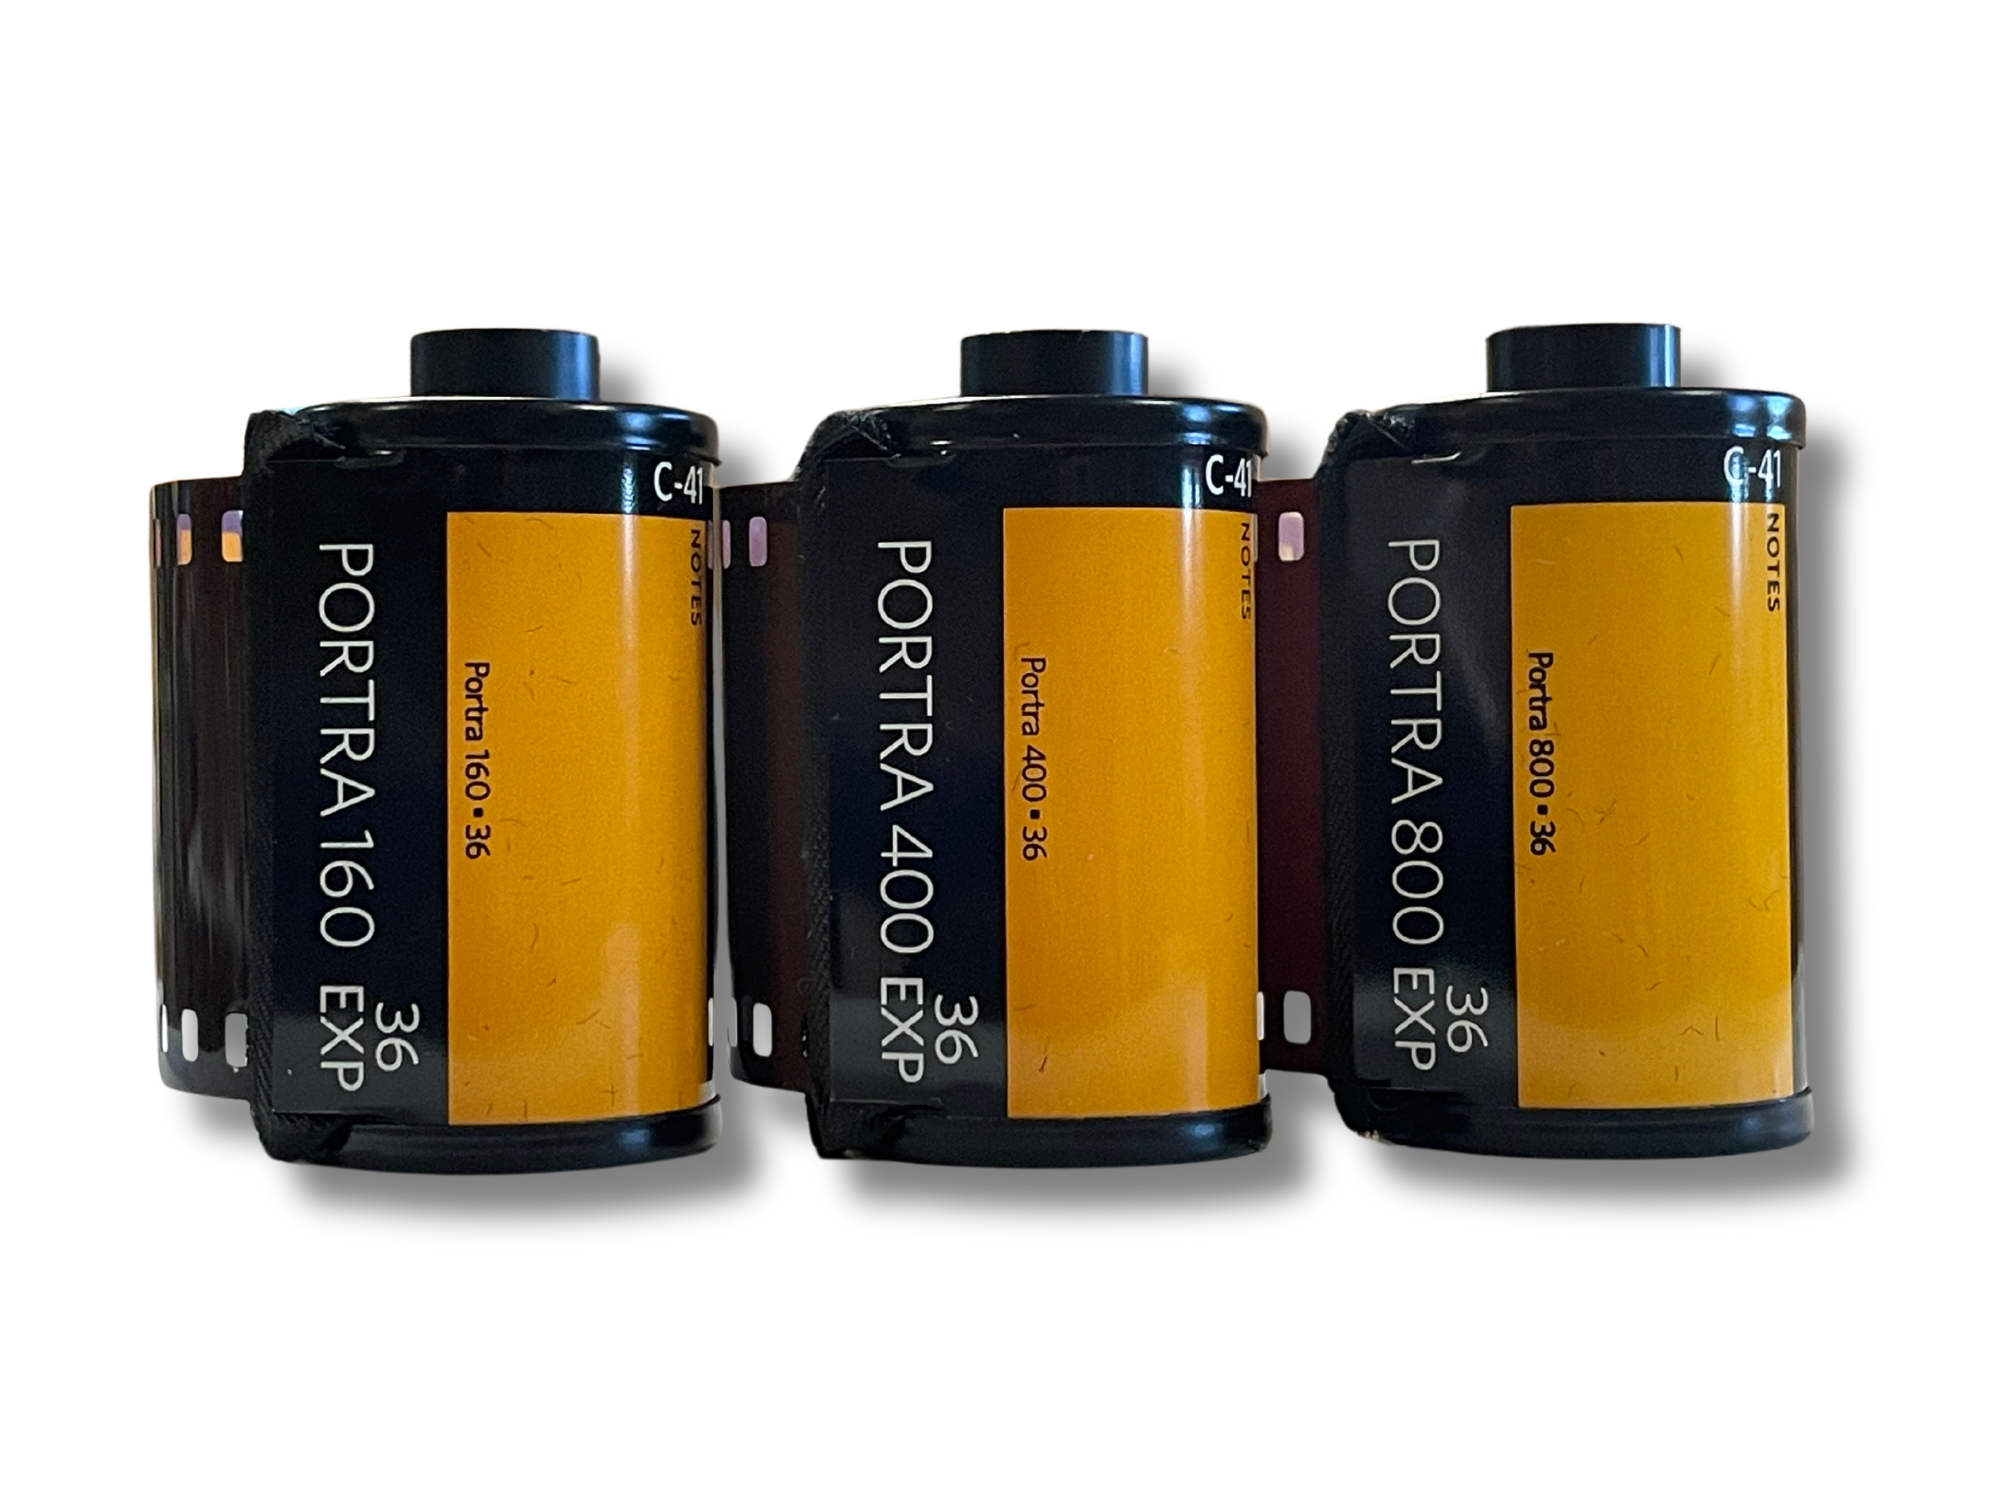 Kodak UltraMax 400 135-36 35mm Boxed Film Wholesale (Single Roll) Exp.